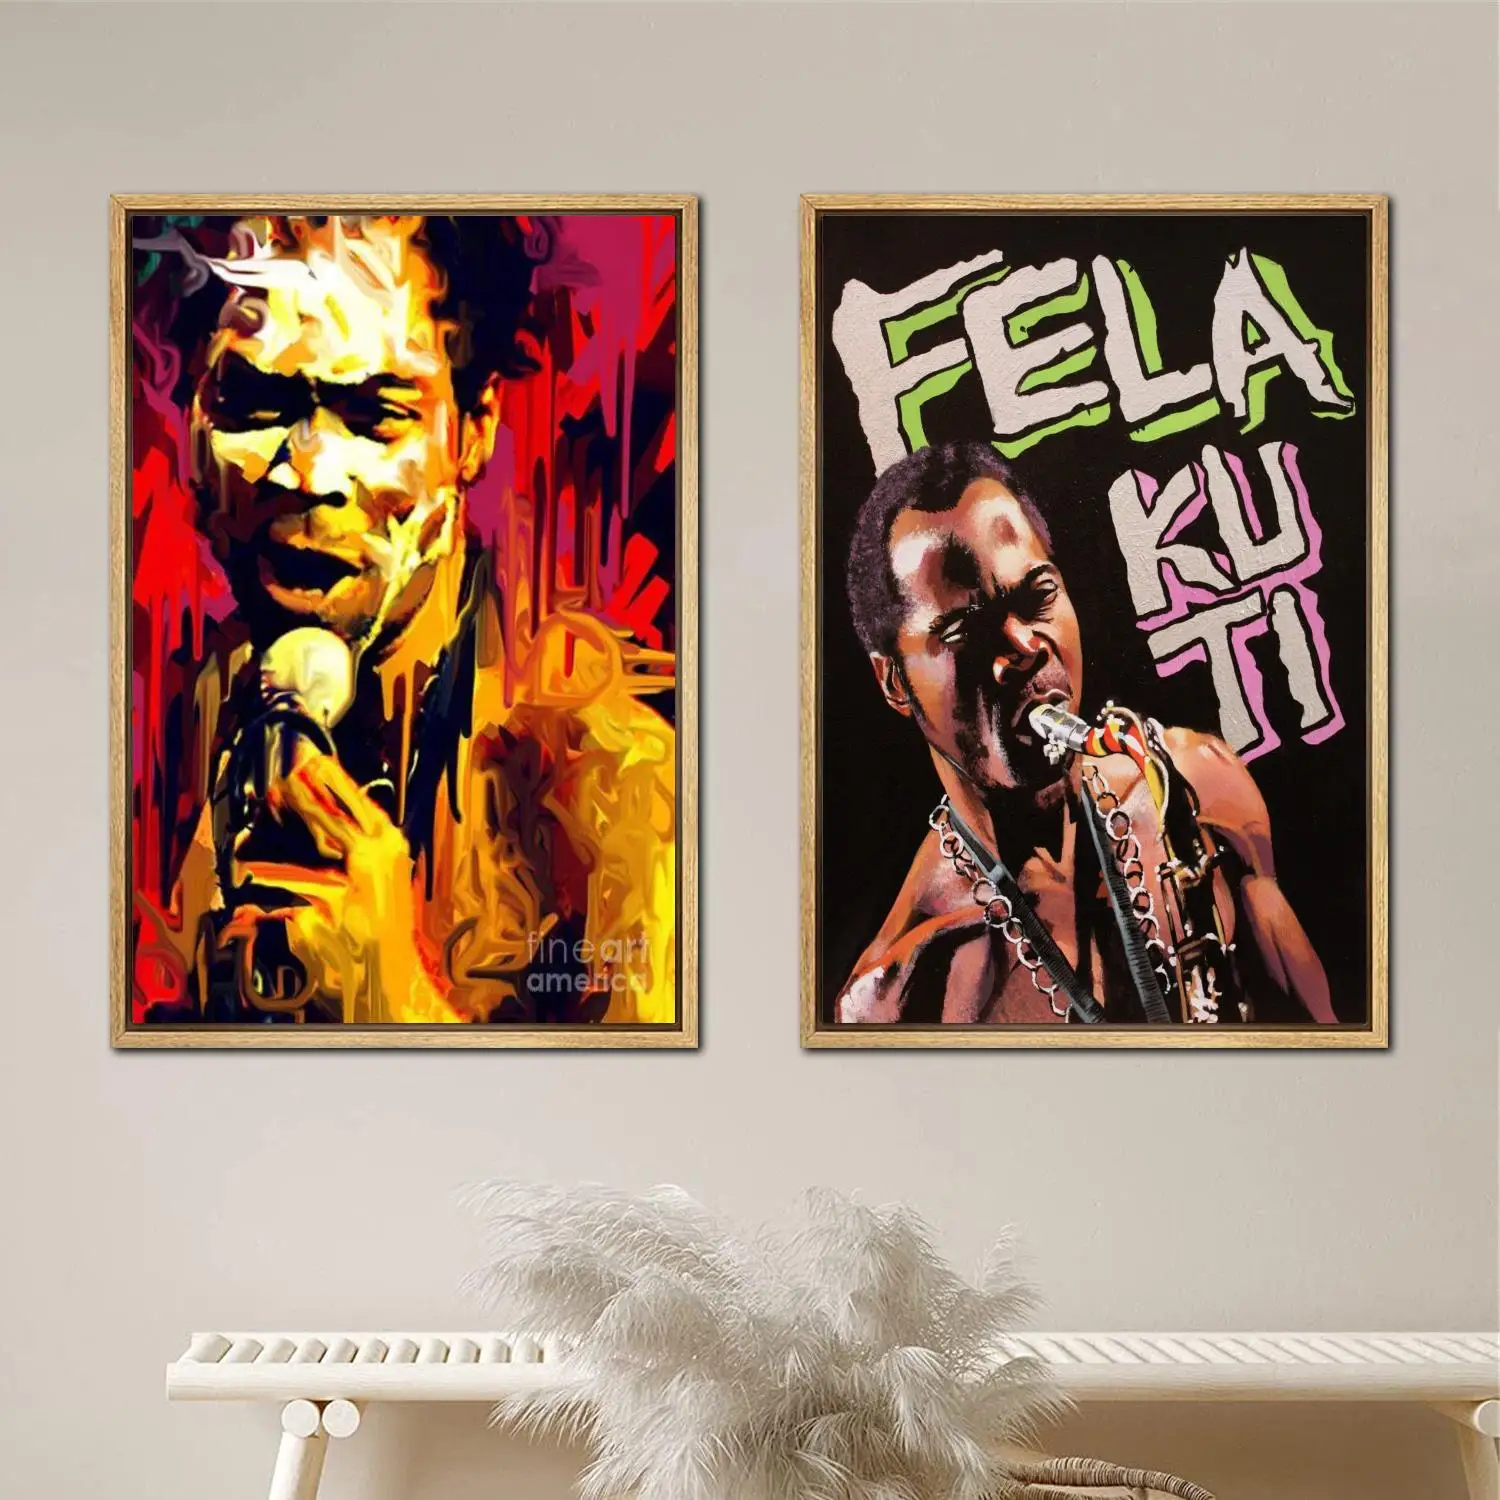 Fela Kuti Poster Painting 24x36 Wall Art Canvas Posters room decor Modern Family bedroom Decoration Art wall decor